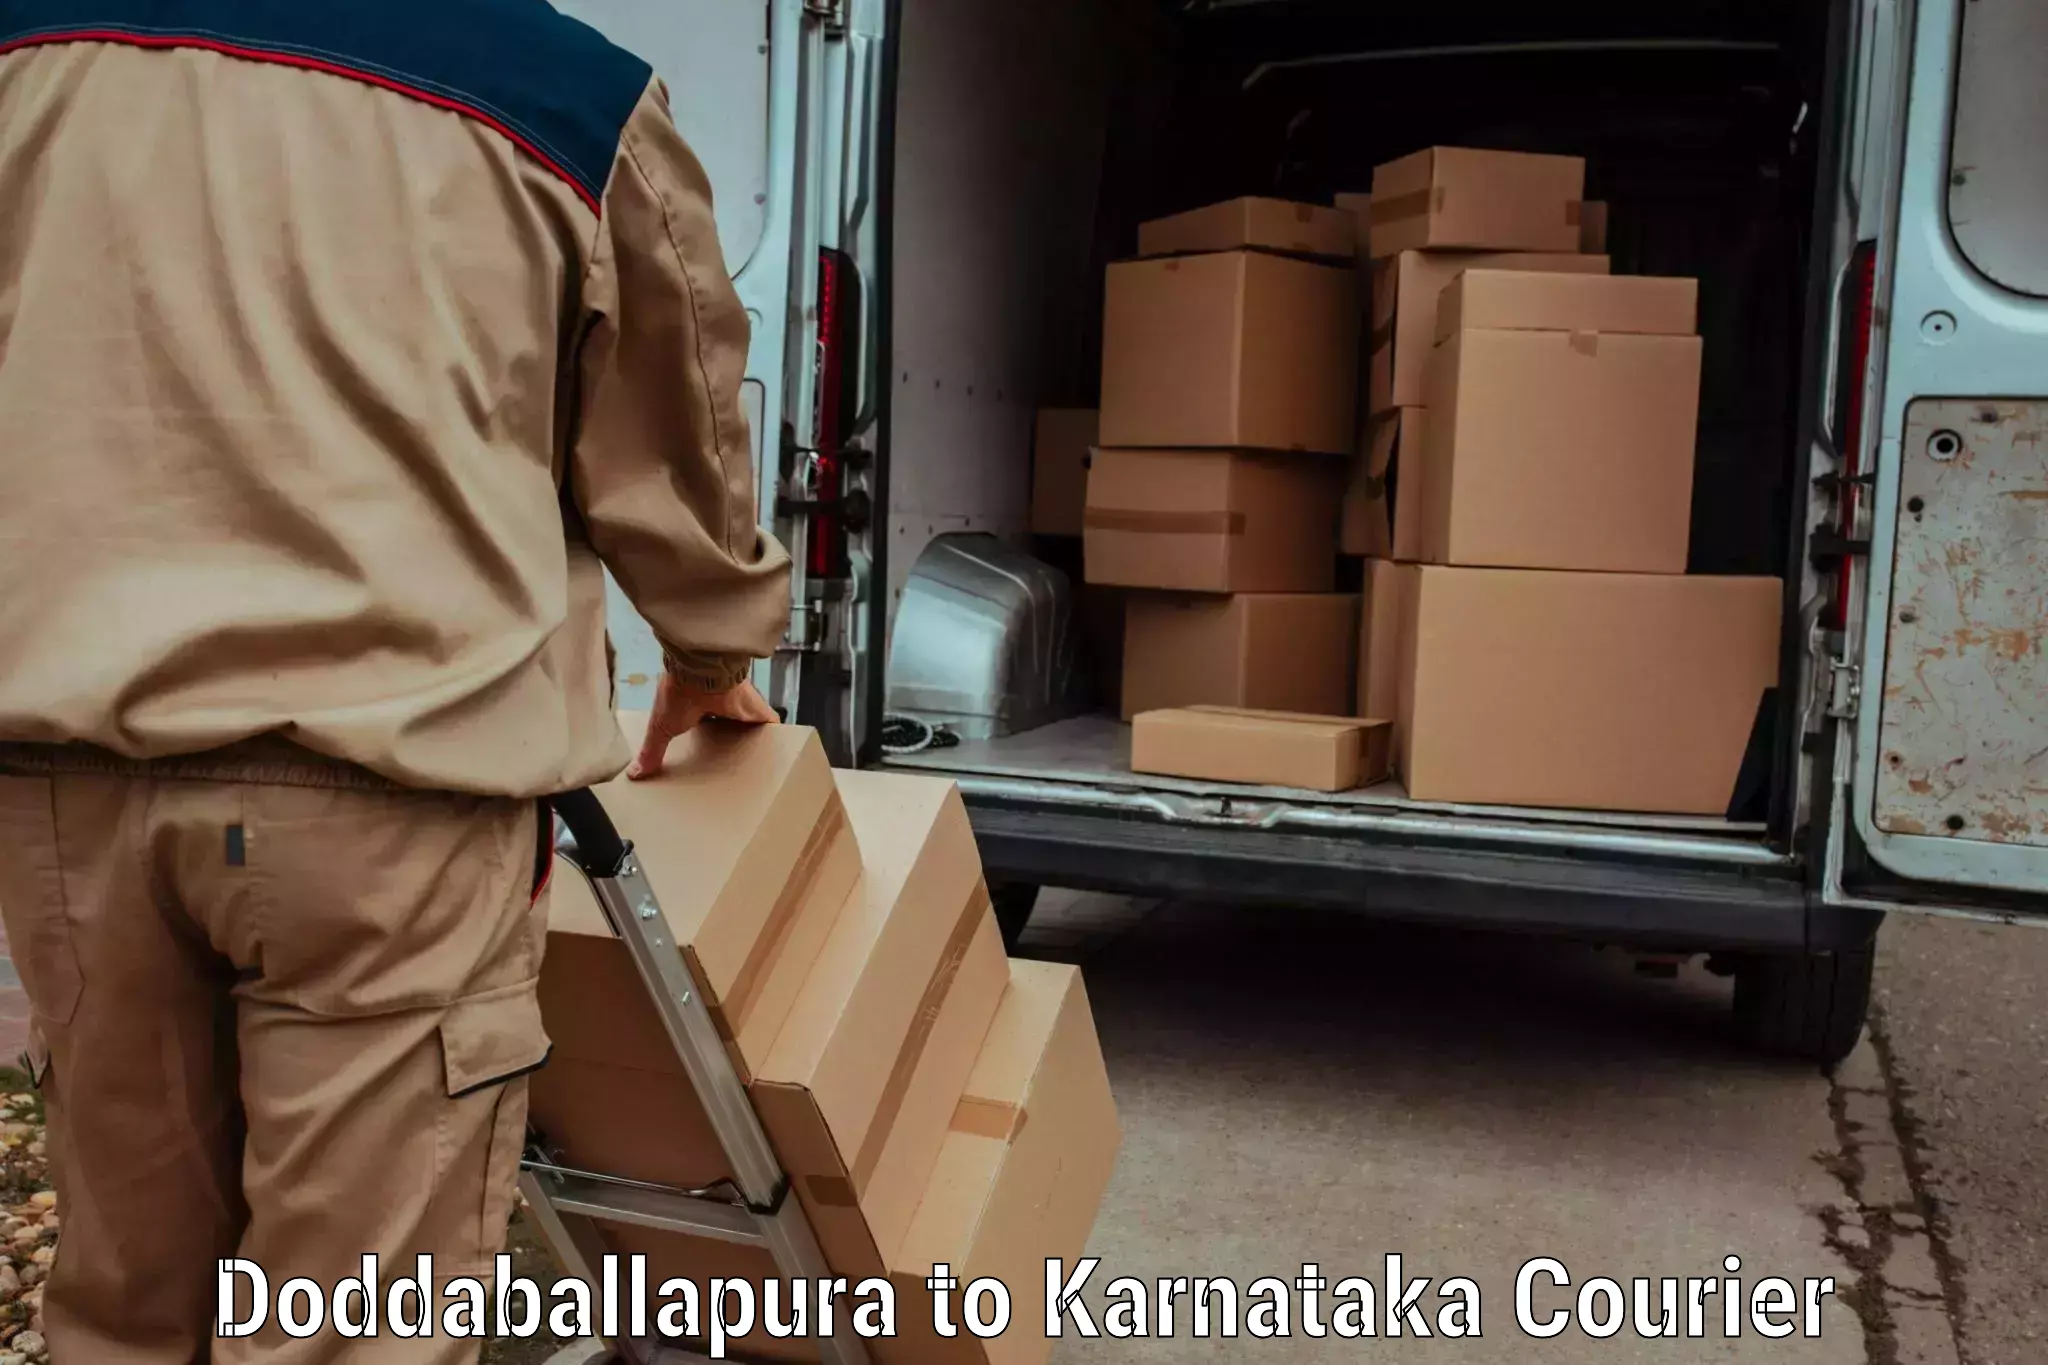 Express delivery capabilities Doddaballapura to Davangere